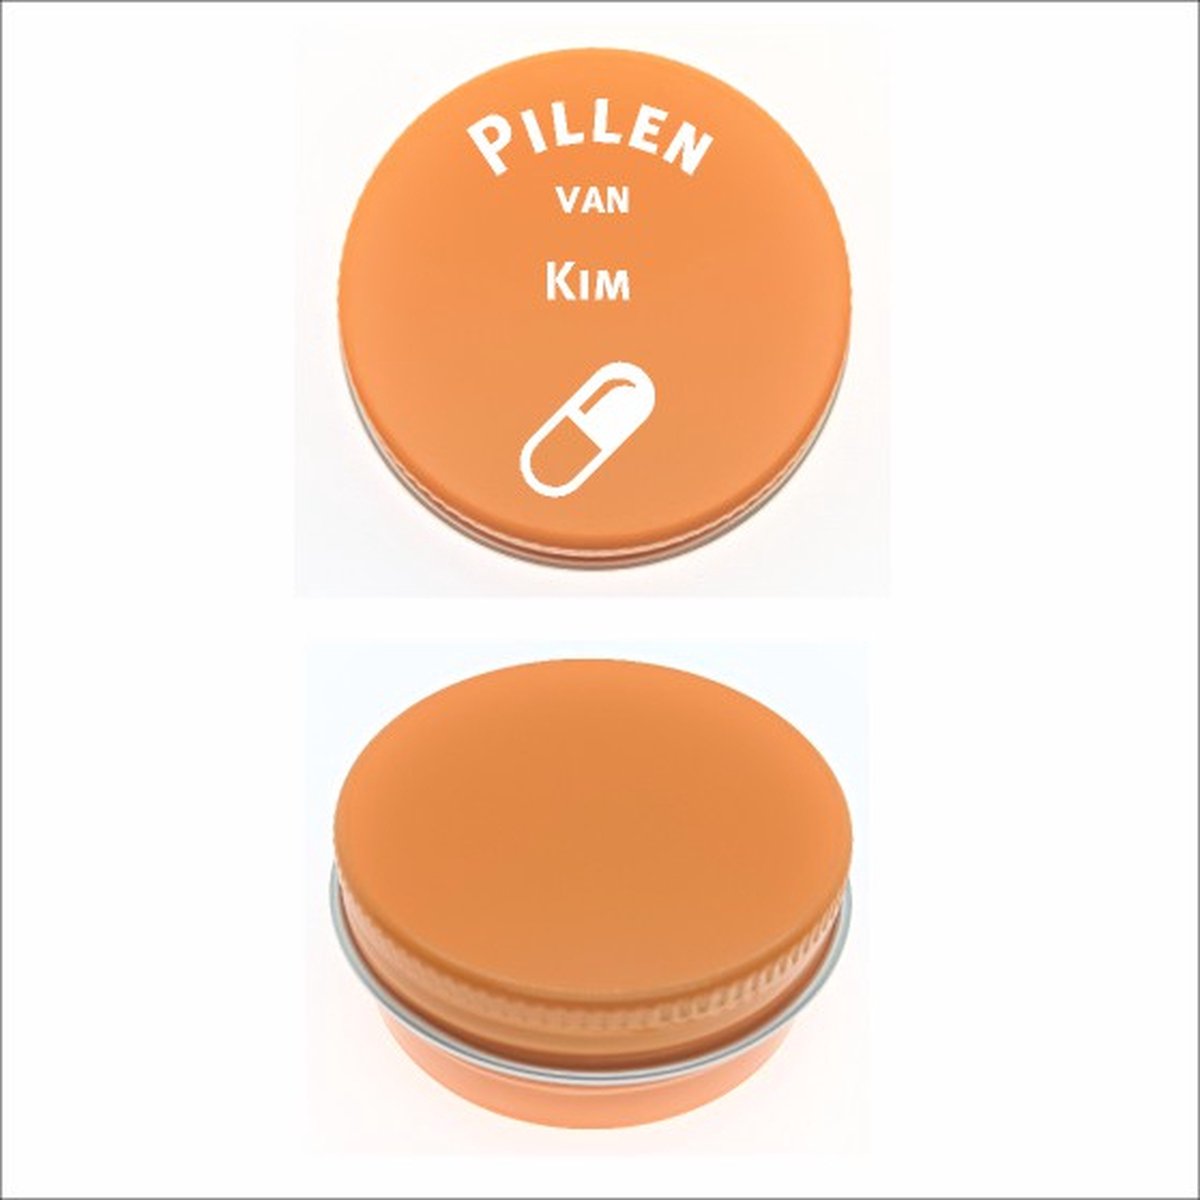 Pillen Blikje Met Naam Gravering - Kim